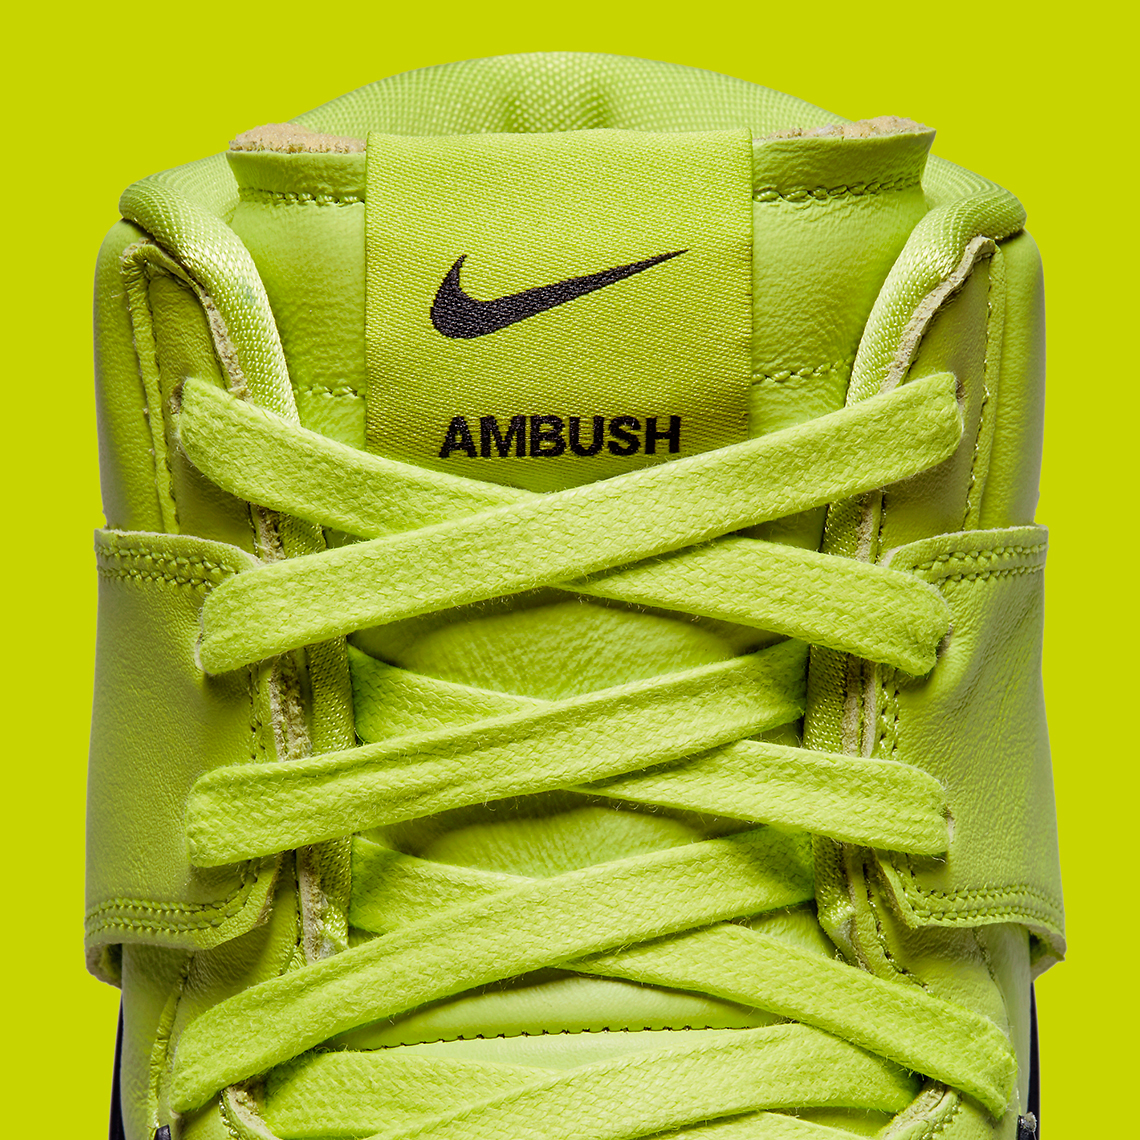 Ambush Nike Bordeaux Bandeau Dri-Fit Swoosh 2.0 Atomic Green Cu7544 300 Release Date 8